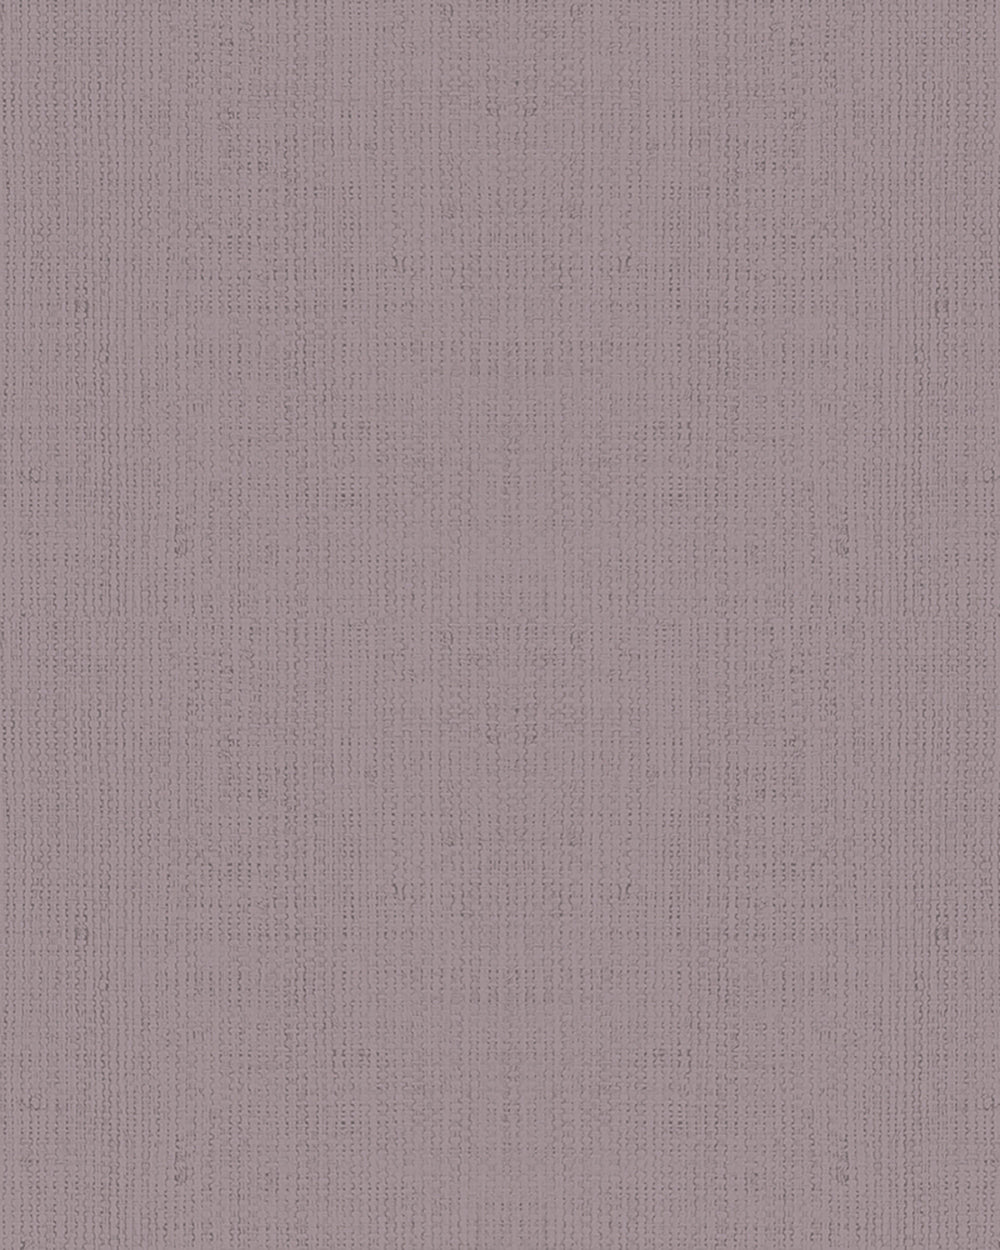 Casual - Textured Rattan Plains plain wallpaper Marburg Roll Purple  30450